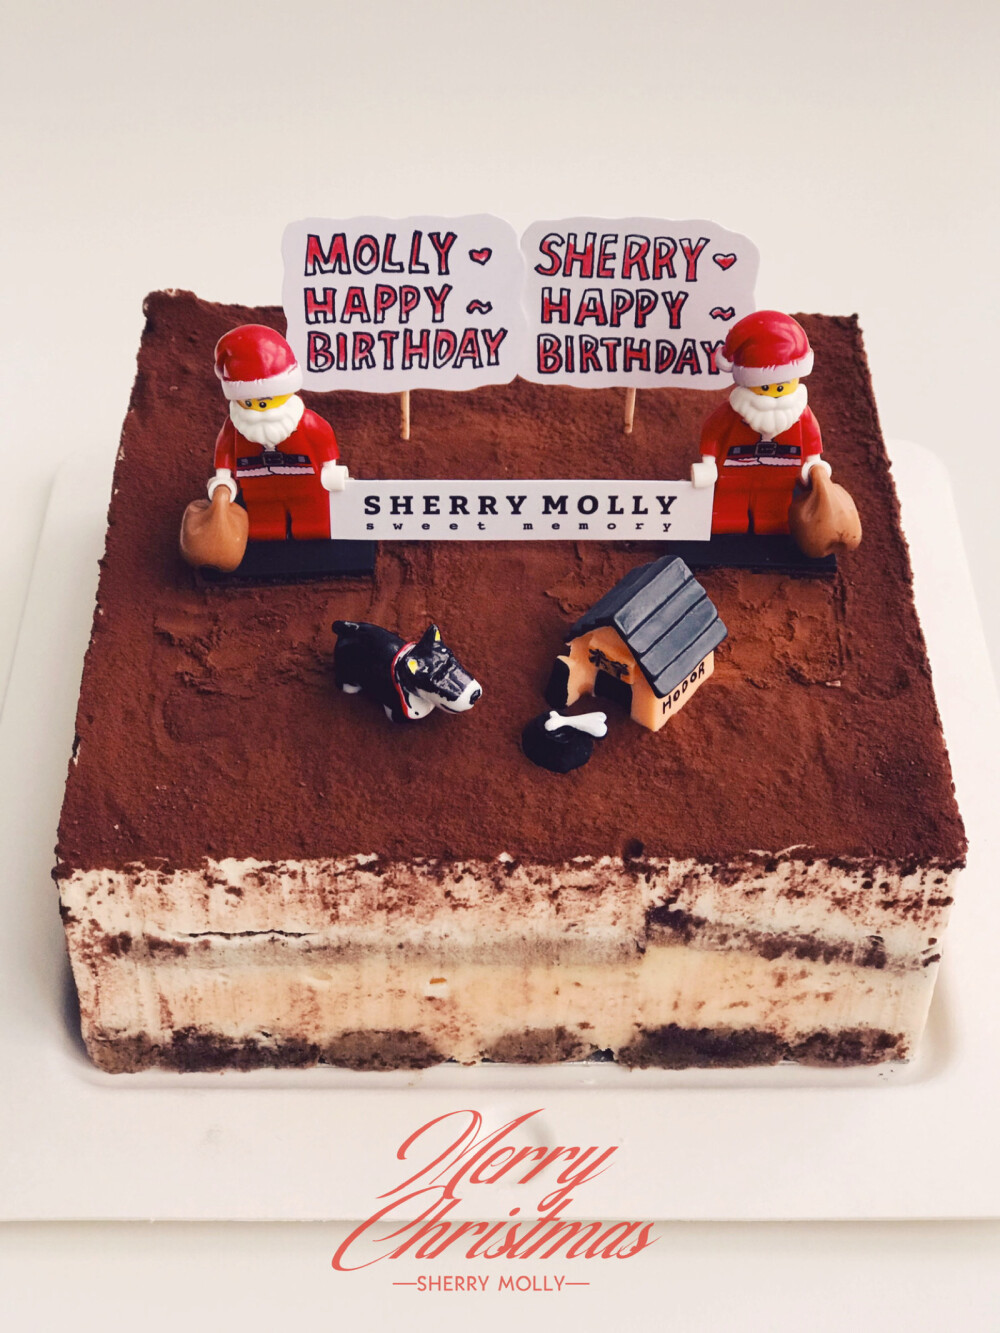 #SHERRY Mollyの生日cake#—『提拉米苏』
又是每年最忙和最快乐的一天啦～
忙完所有客人的订单之后才轮到我们自己呢
今年好巧呀 刚好做了一整个的提拉米苏
把我们这个小家装饰到cake上 真好看
